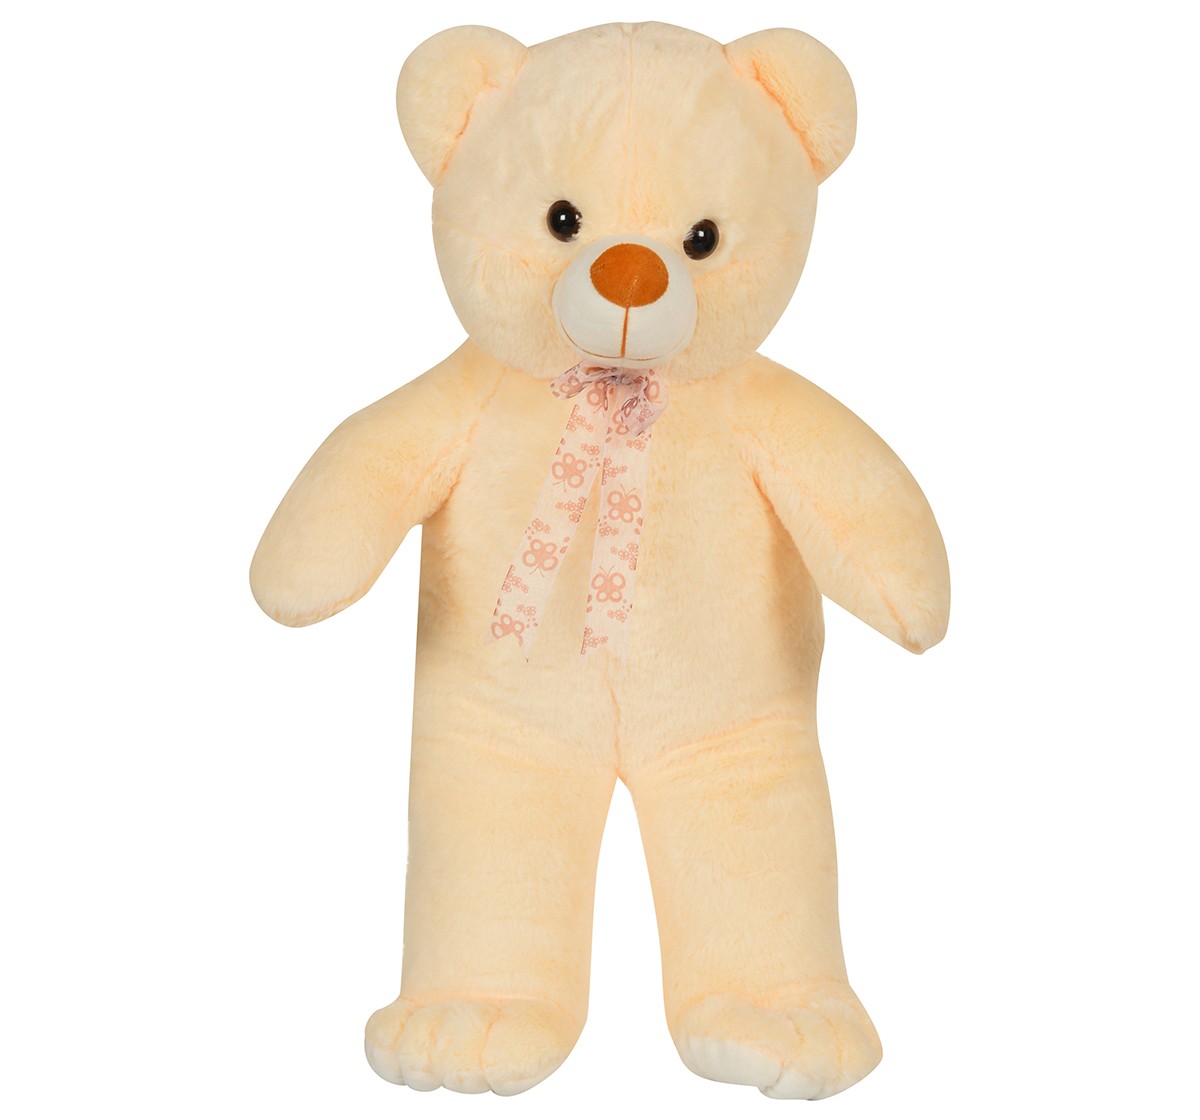 Mirada 60cm floppy teddy bear soft toy Multicolor 3Y+